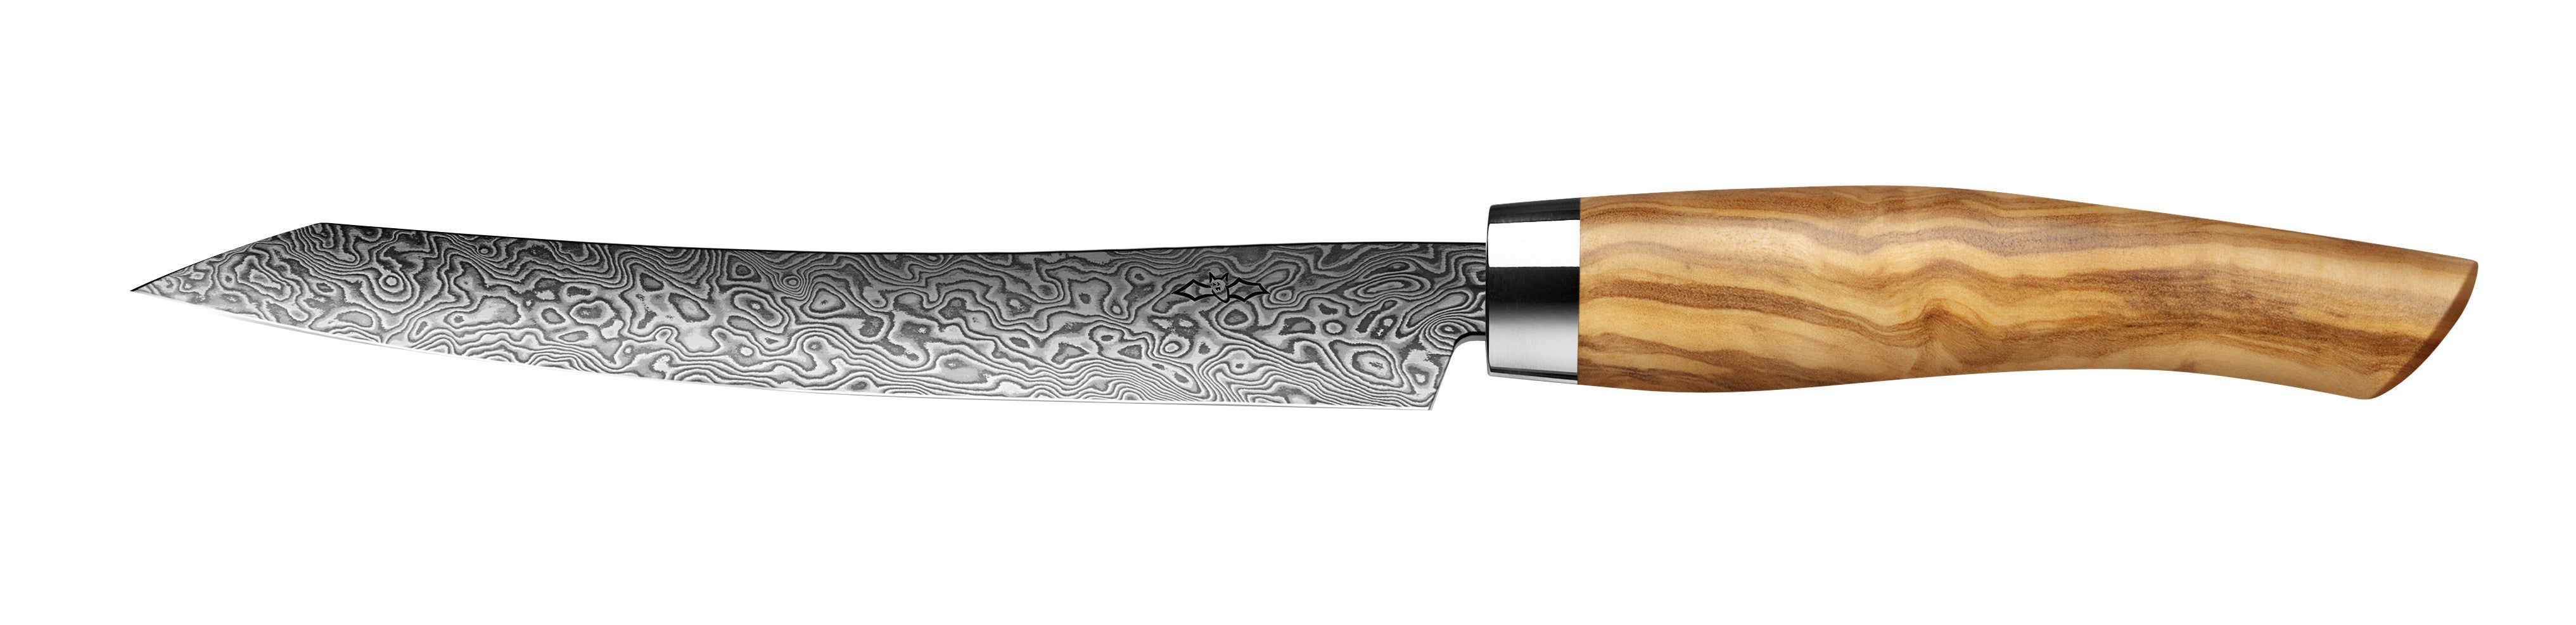 Nesmuk Tranchiermesser Slicer C90 mit Klinge aus Damaszener Stahl und Griff aus Olivenholz